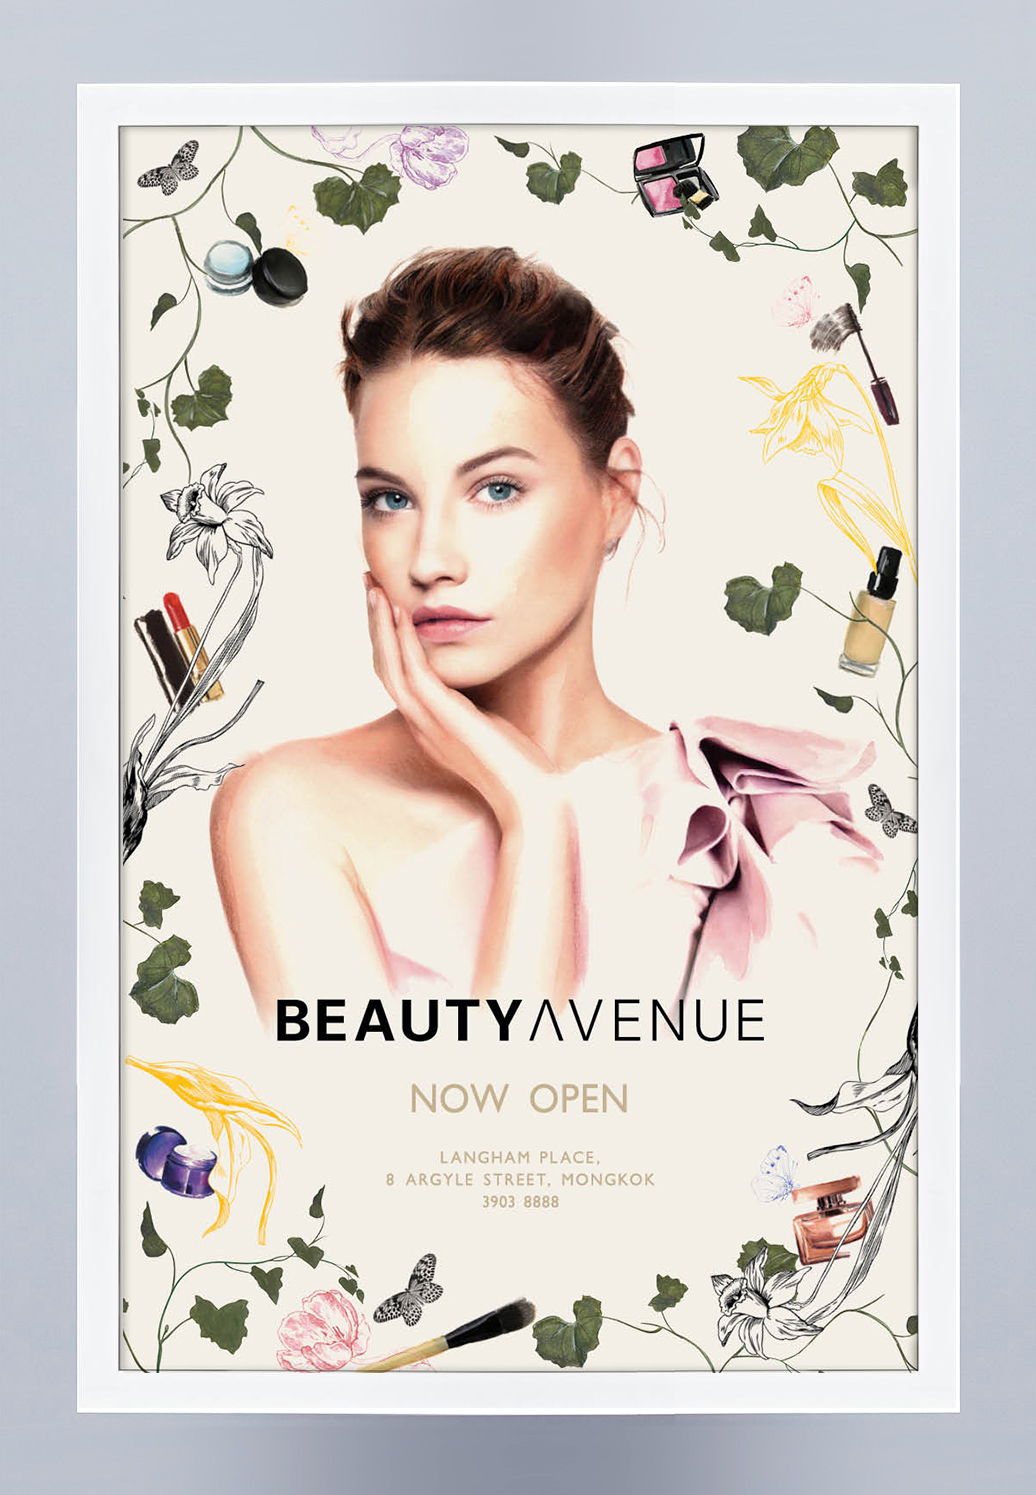 beauty Beauty Avenue Nature Christmas Holiday makeup Cosmetic perfume china Hong Kong shop boutique ads bus watercolour